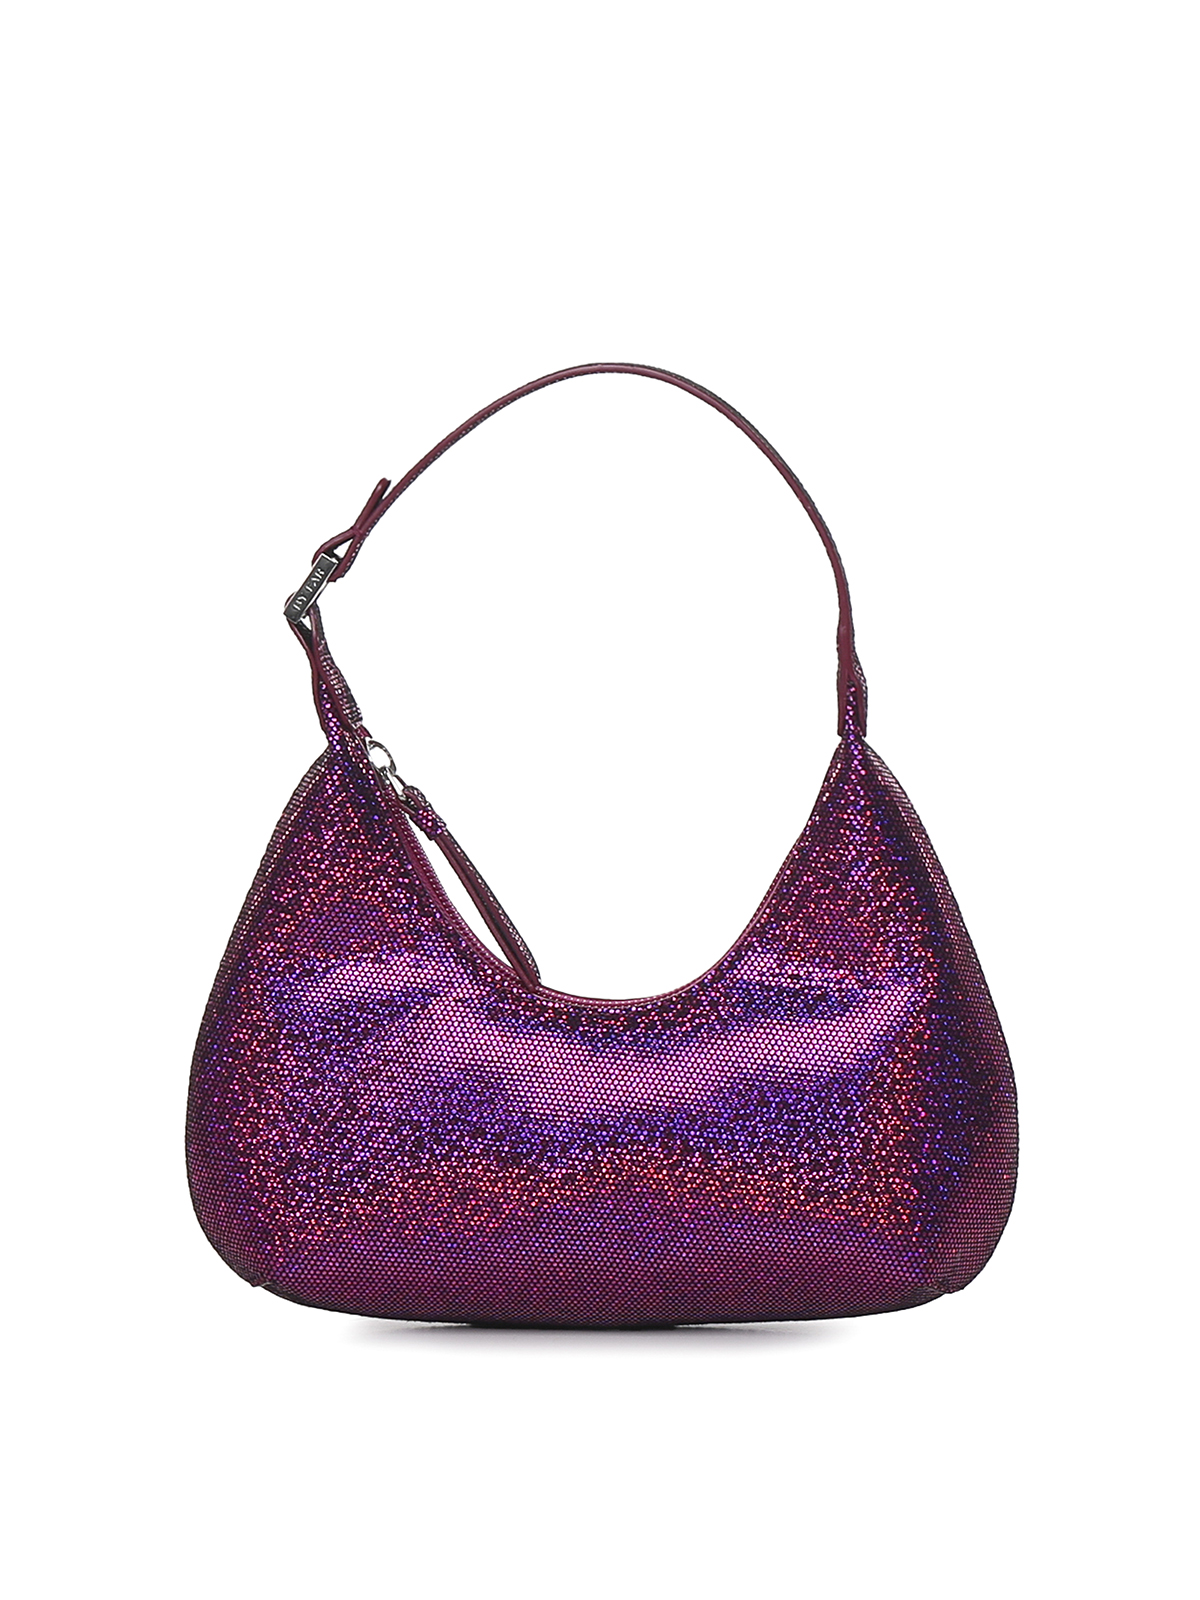 BY FAR Amber leather shoulder bag, Purple